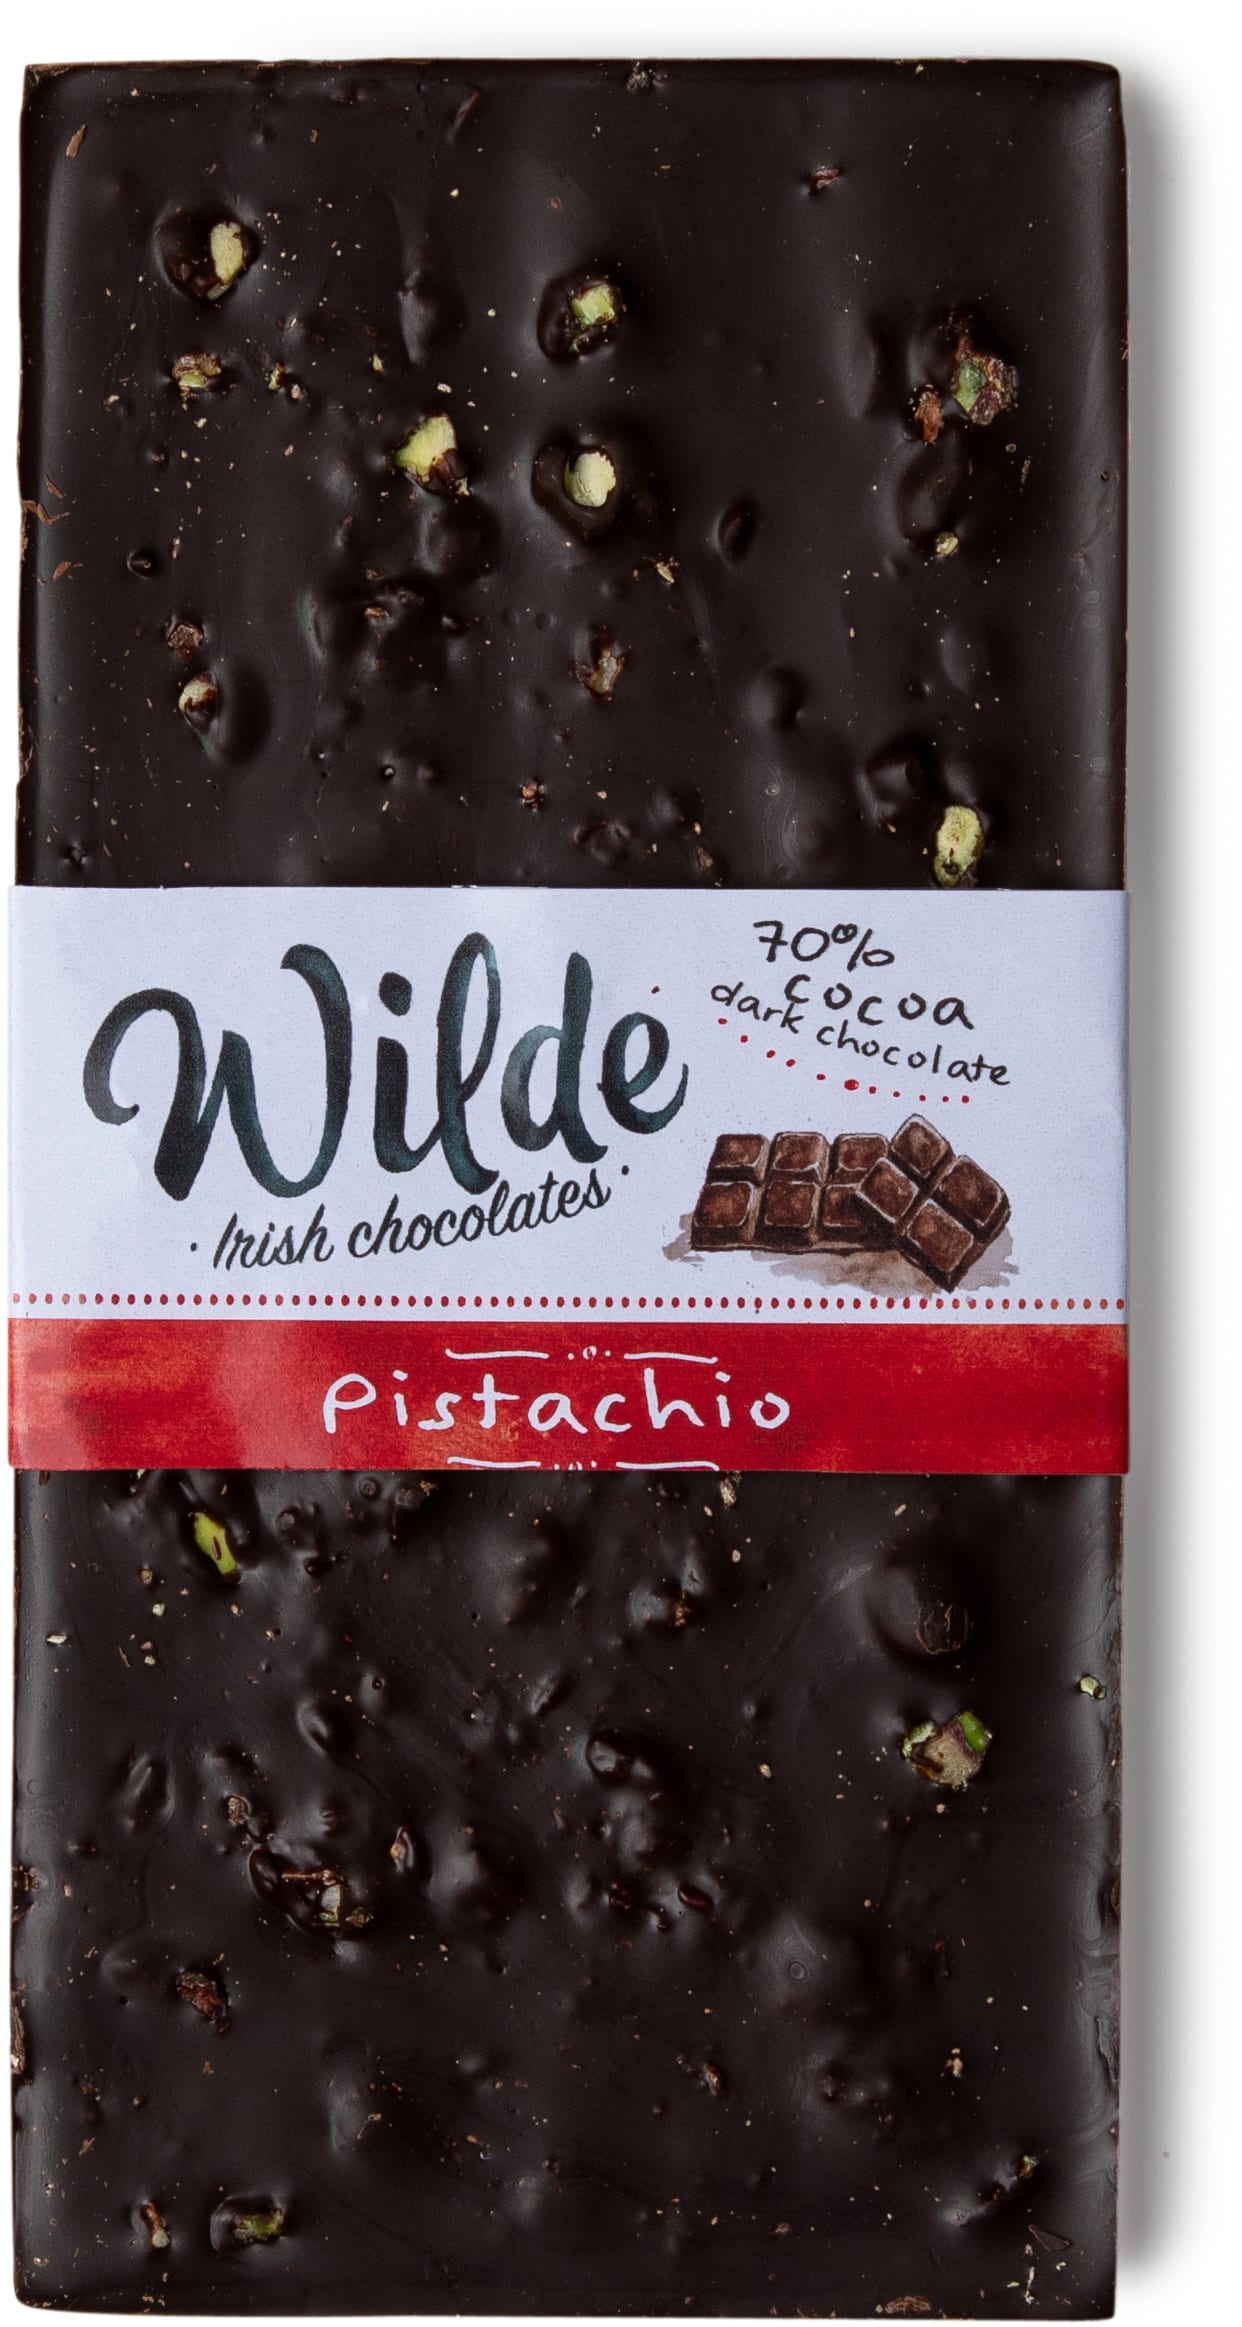 Wilde Irish Chocolates Pistachio bar - 70% cocoa dark chocolate bar